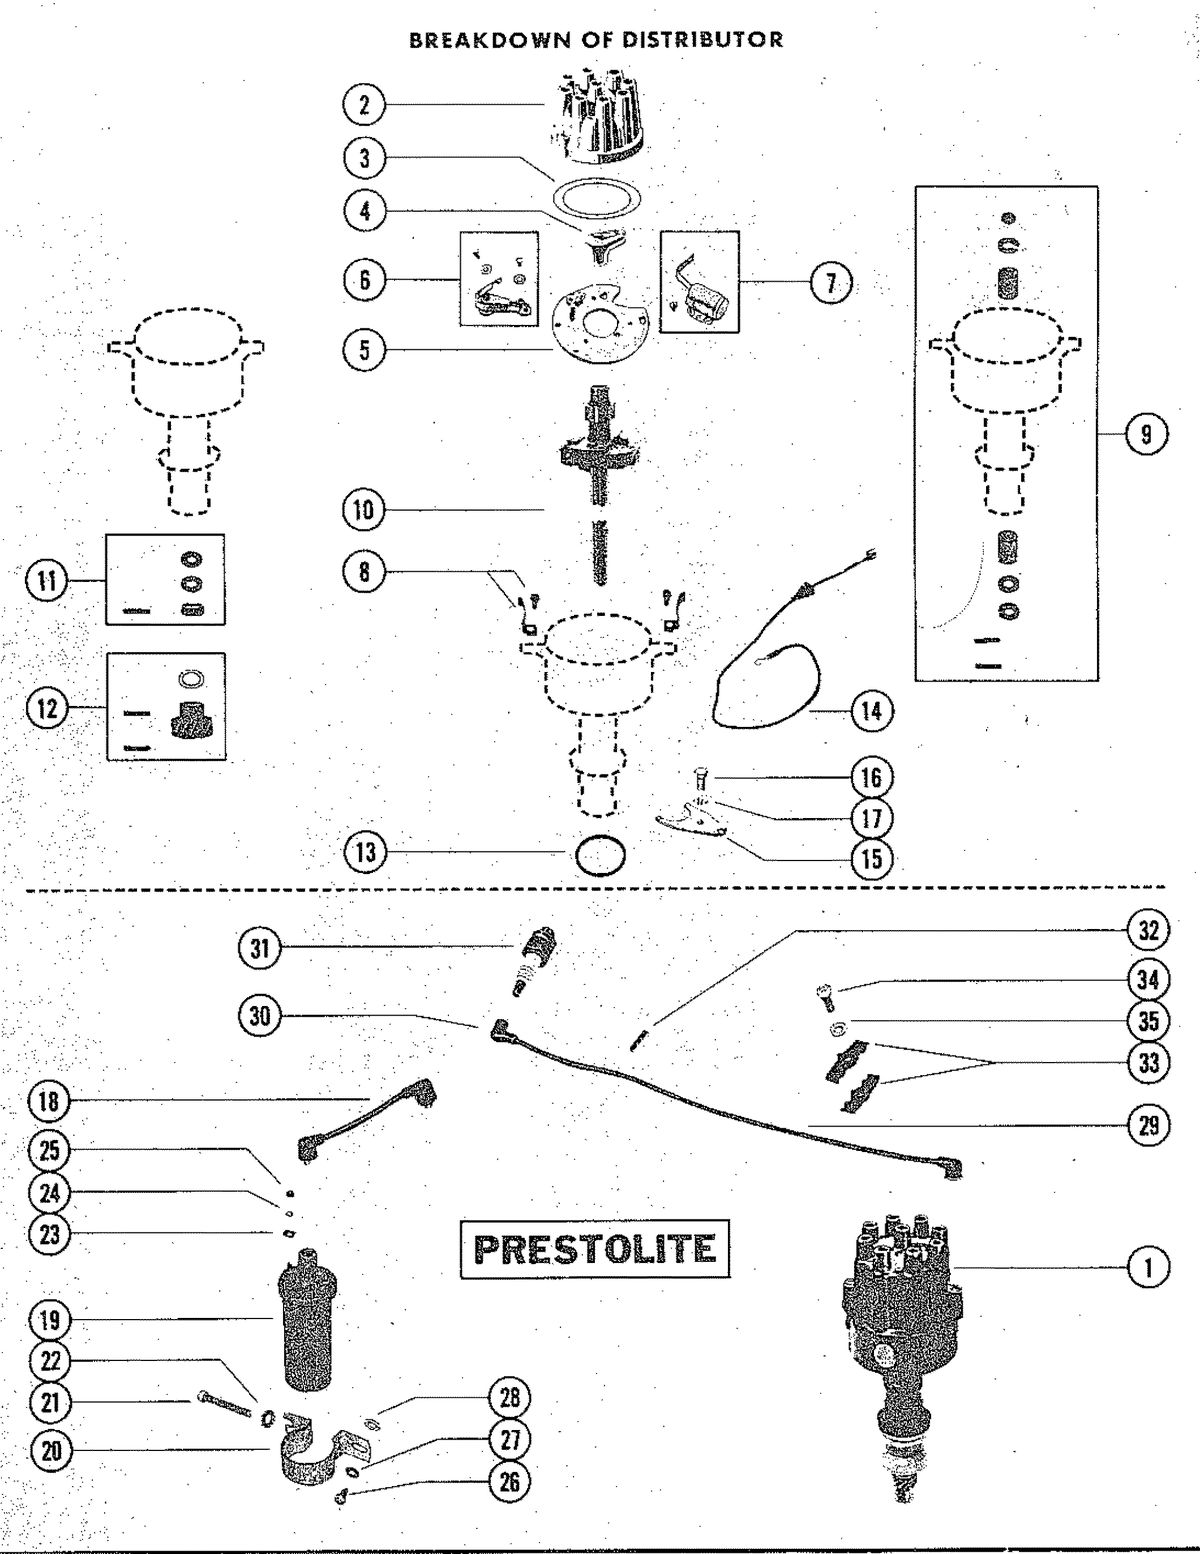 MERCRUISER 888 (2 BBL)ENGINE DISTRIBUTOR ASSEMBLY, COMPLETE (PRESTOLITE)